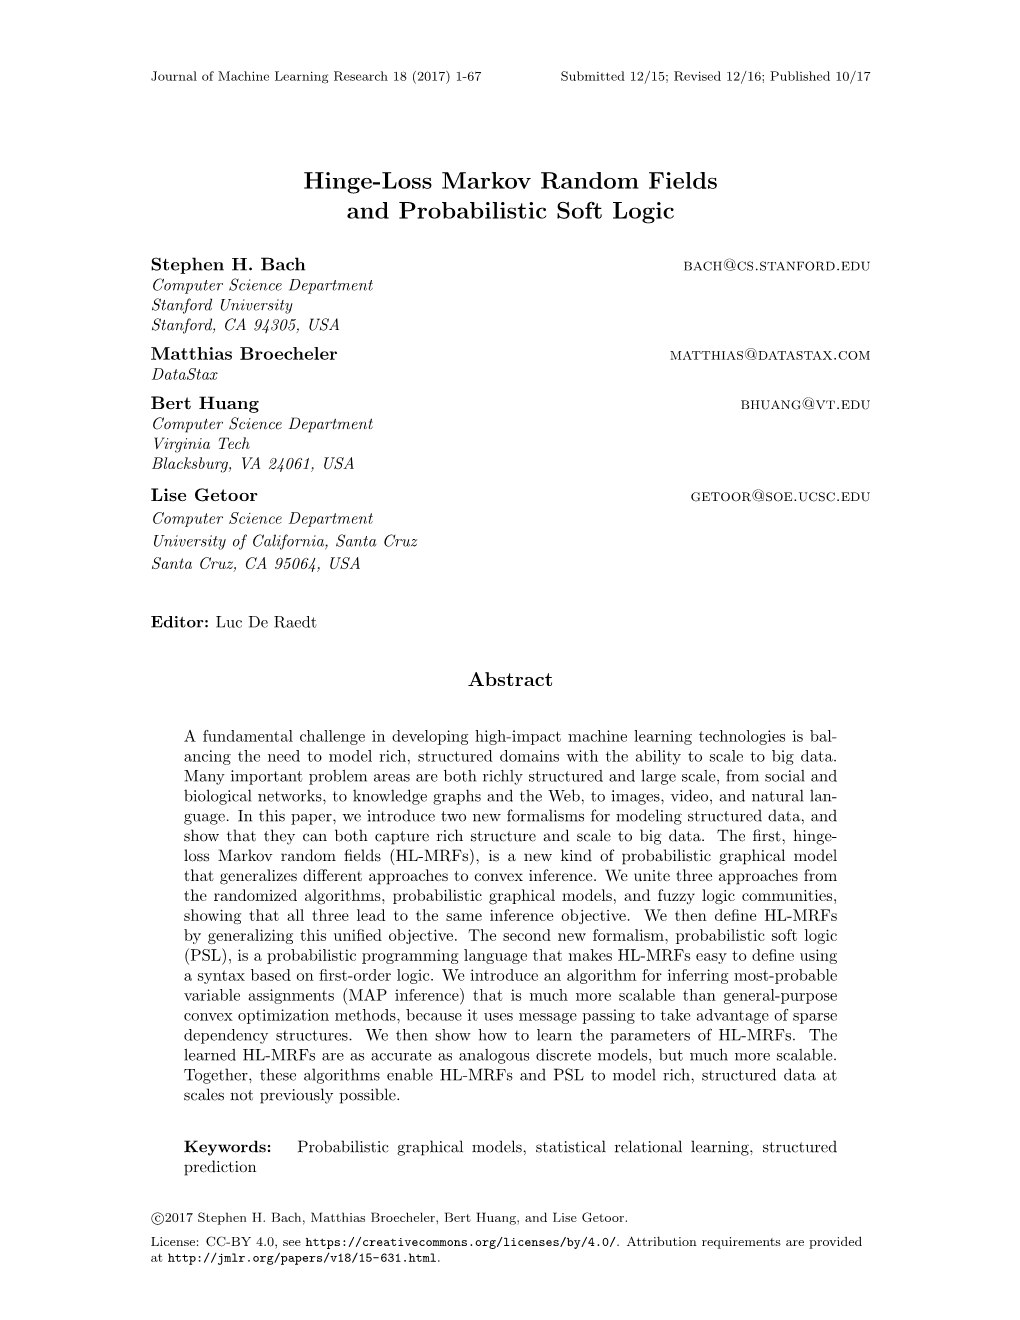 Hinge-Loss Markov Random Fields and Probabilistic Soft Logic